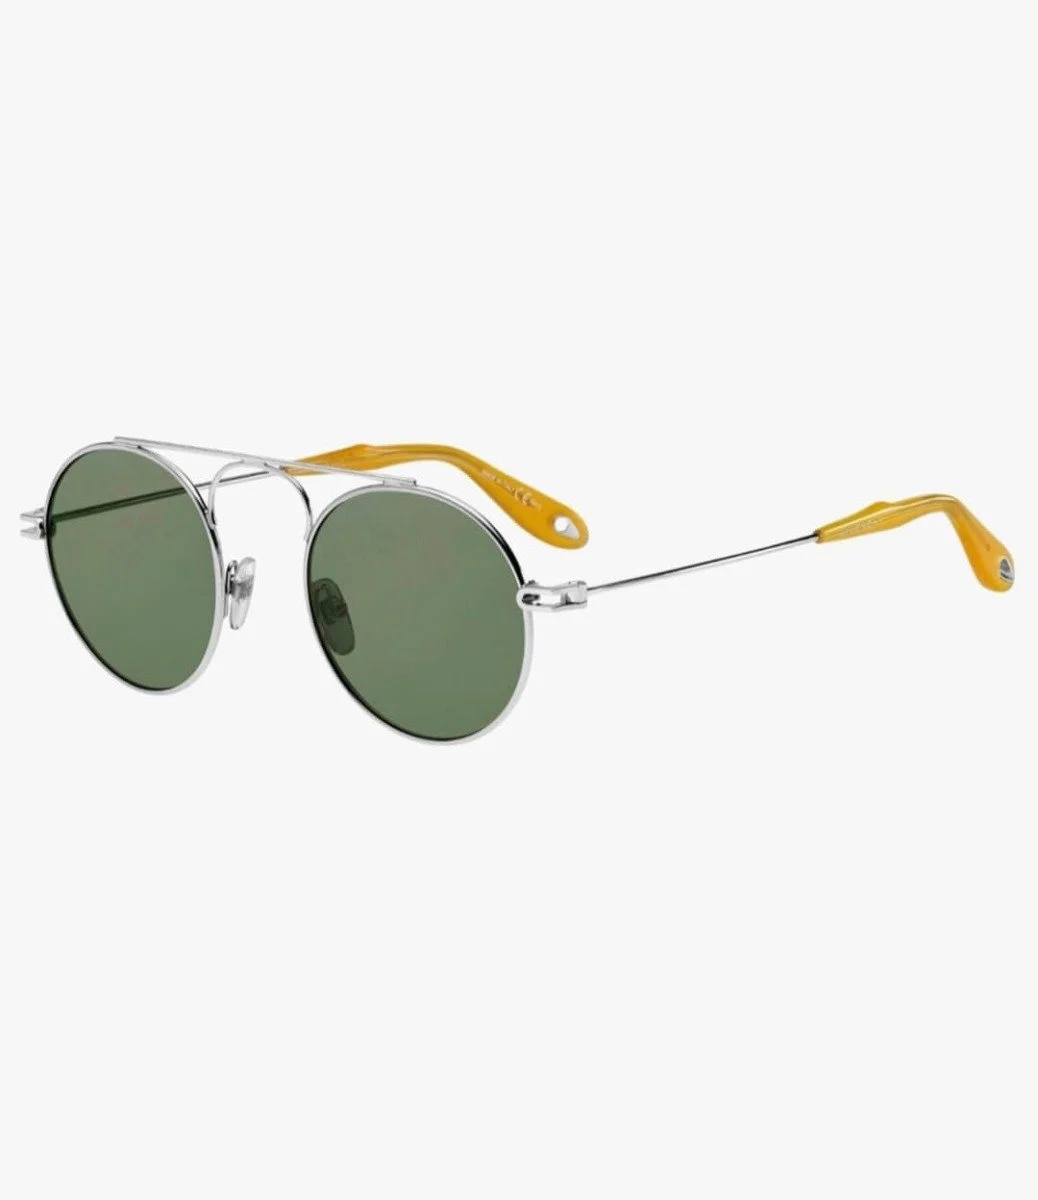 Givenchy Sunglasses - 2